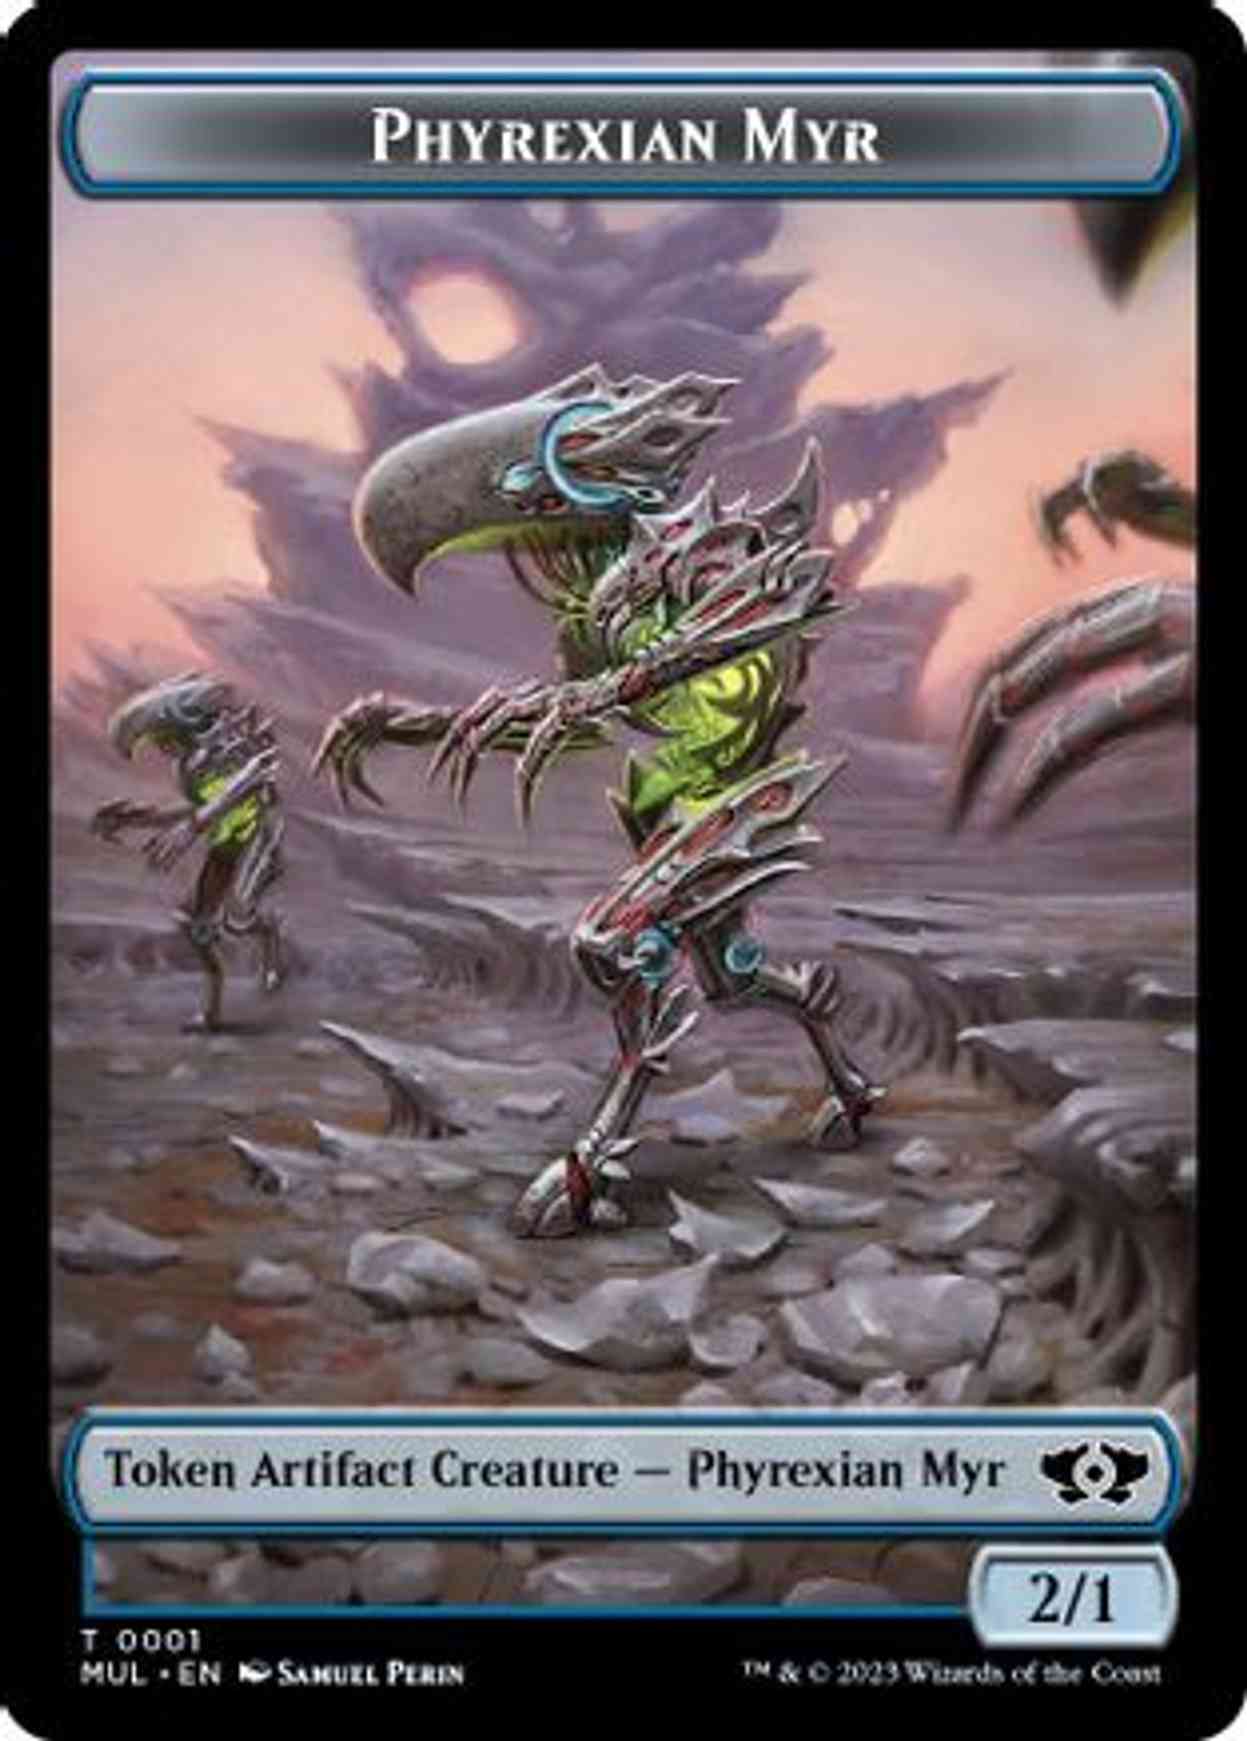 Phyrexian Myr // Phyrexian Hydra (0011) Double-Sided Token magic card front